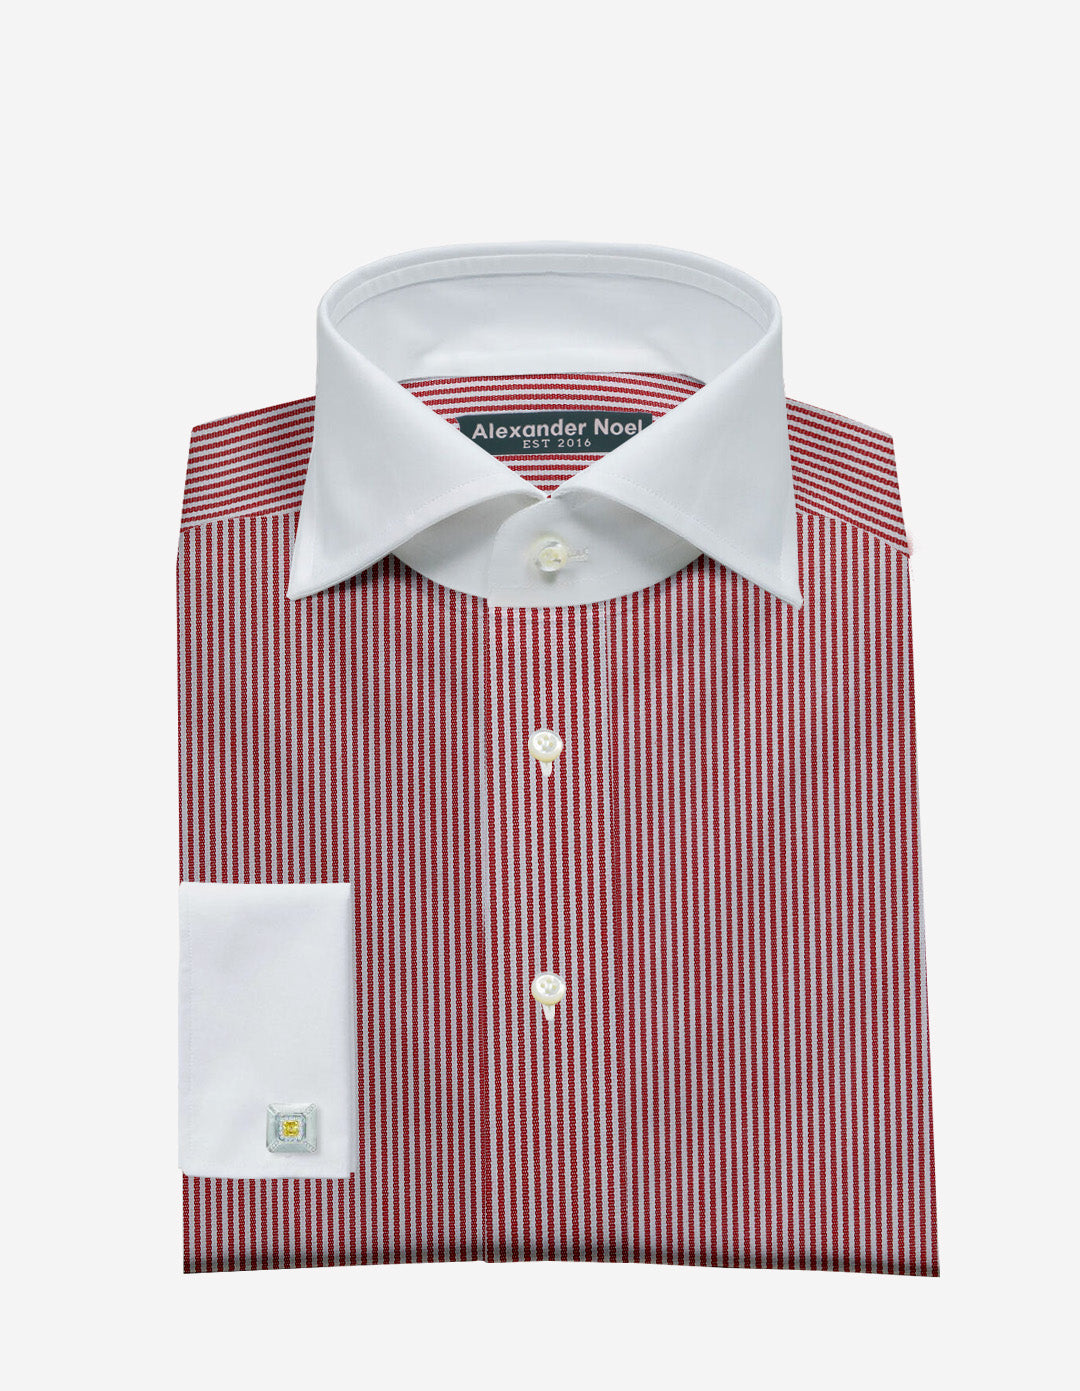 Red Stripes men’s dress shirt